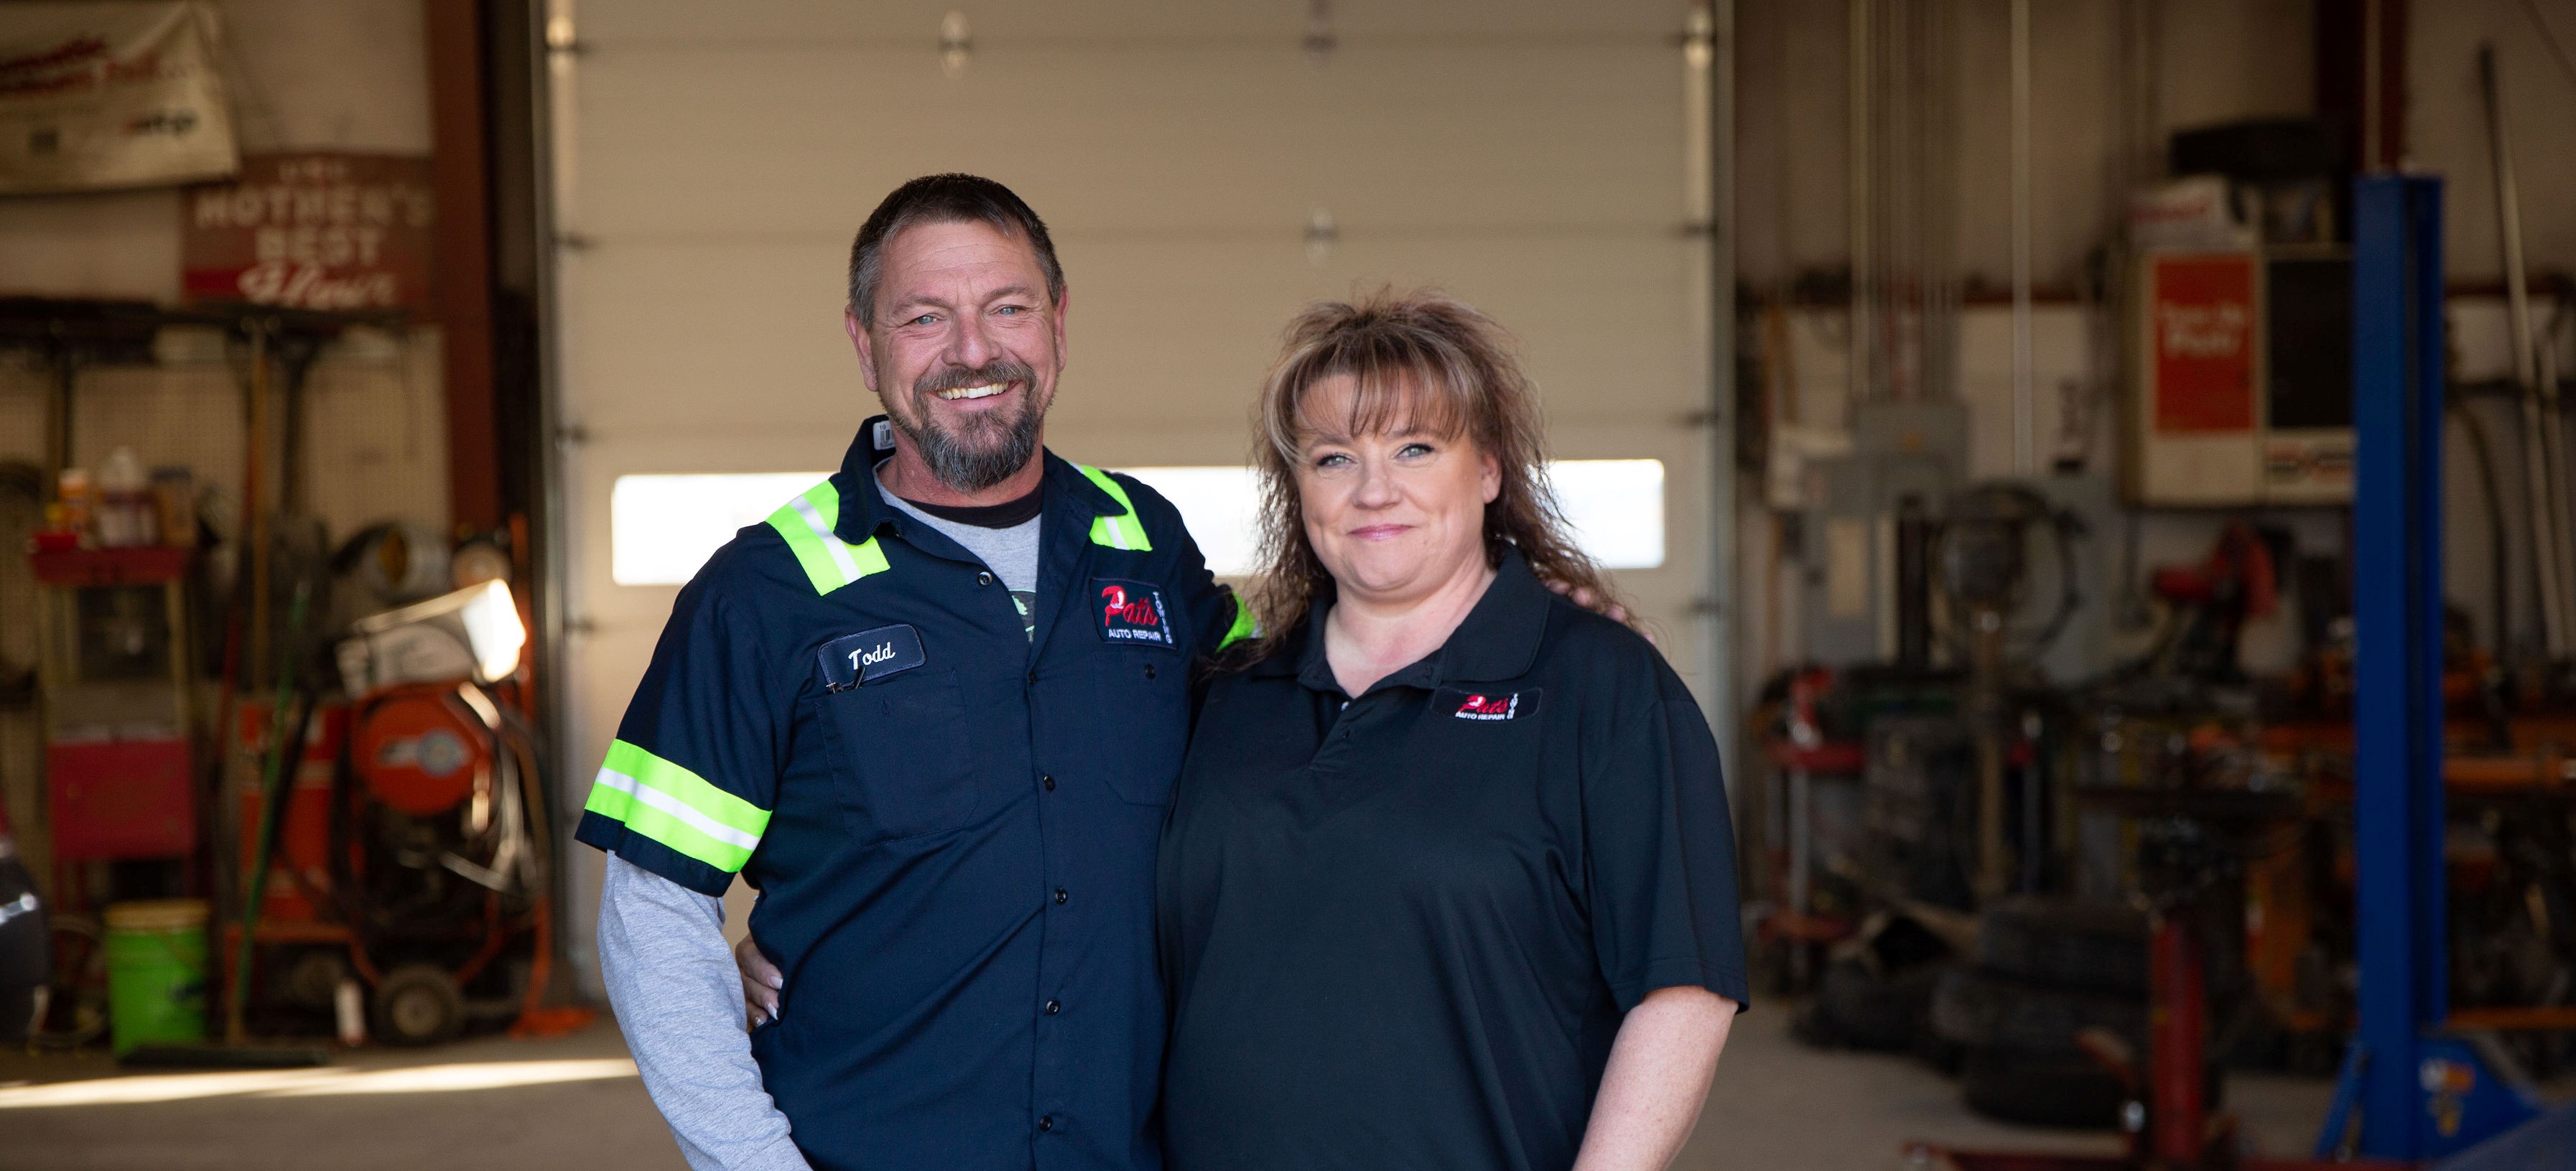 Meet our staff at Pat's Auto Repair & Towing in Hastings, NE